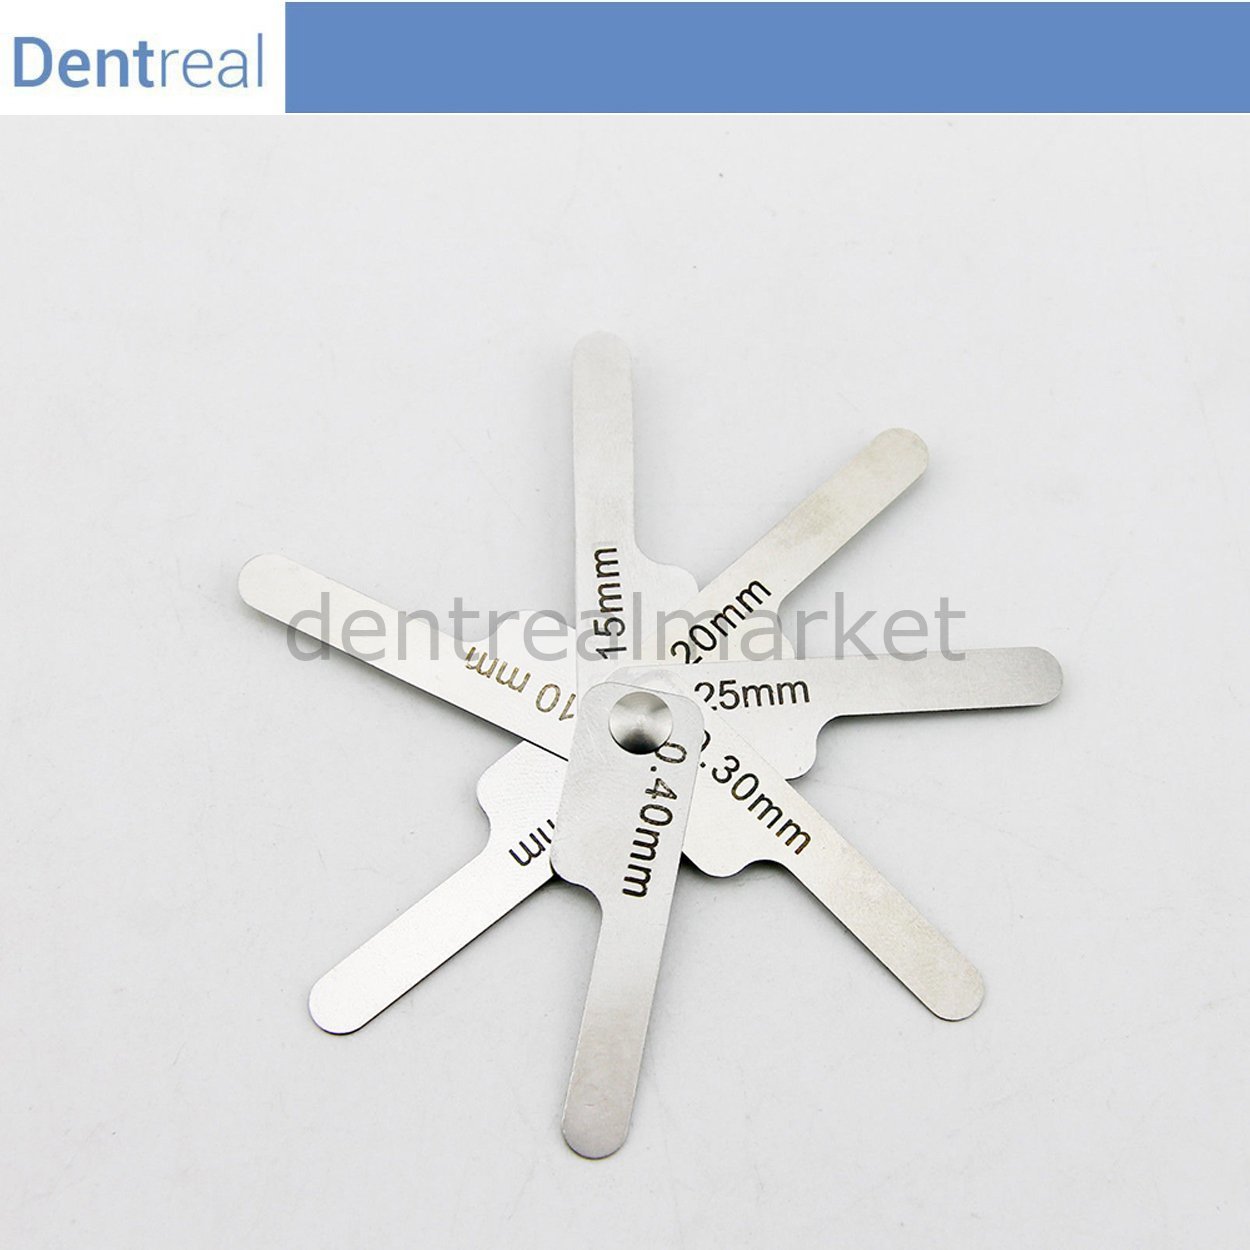 DentrealStore - Dentreal Drm Interproximal Interface Sanding Kit